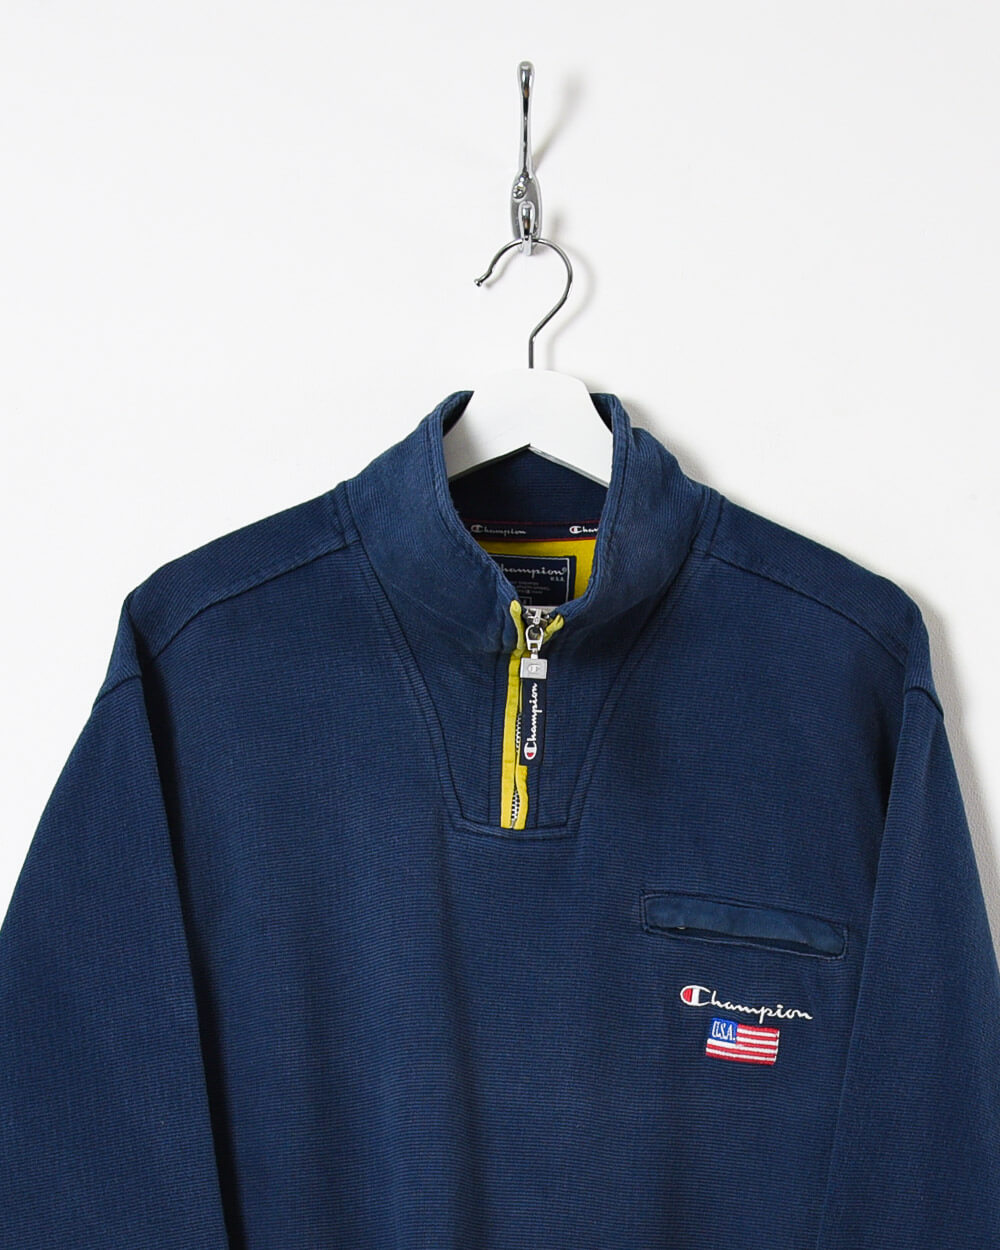 Navy Champion USA 1/4 Zip Sweatshirt - Medium